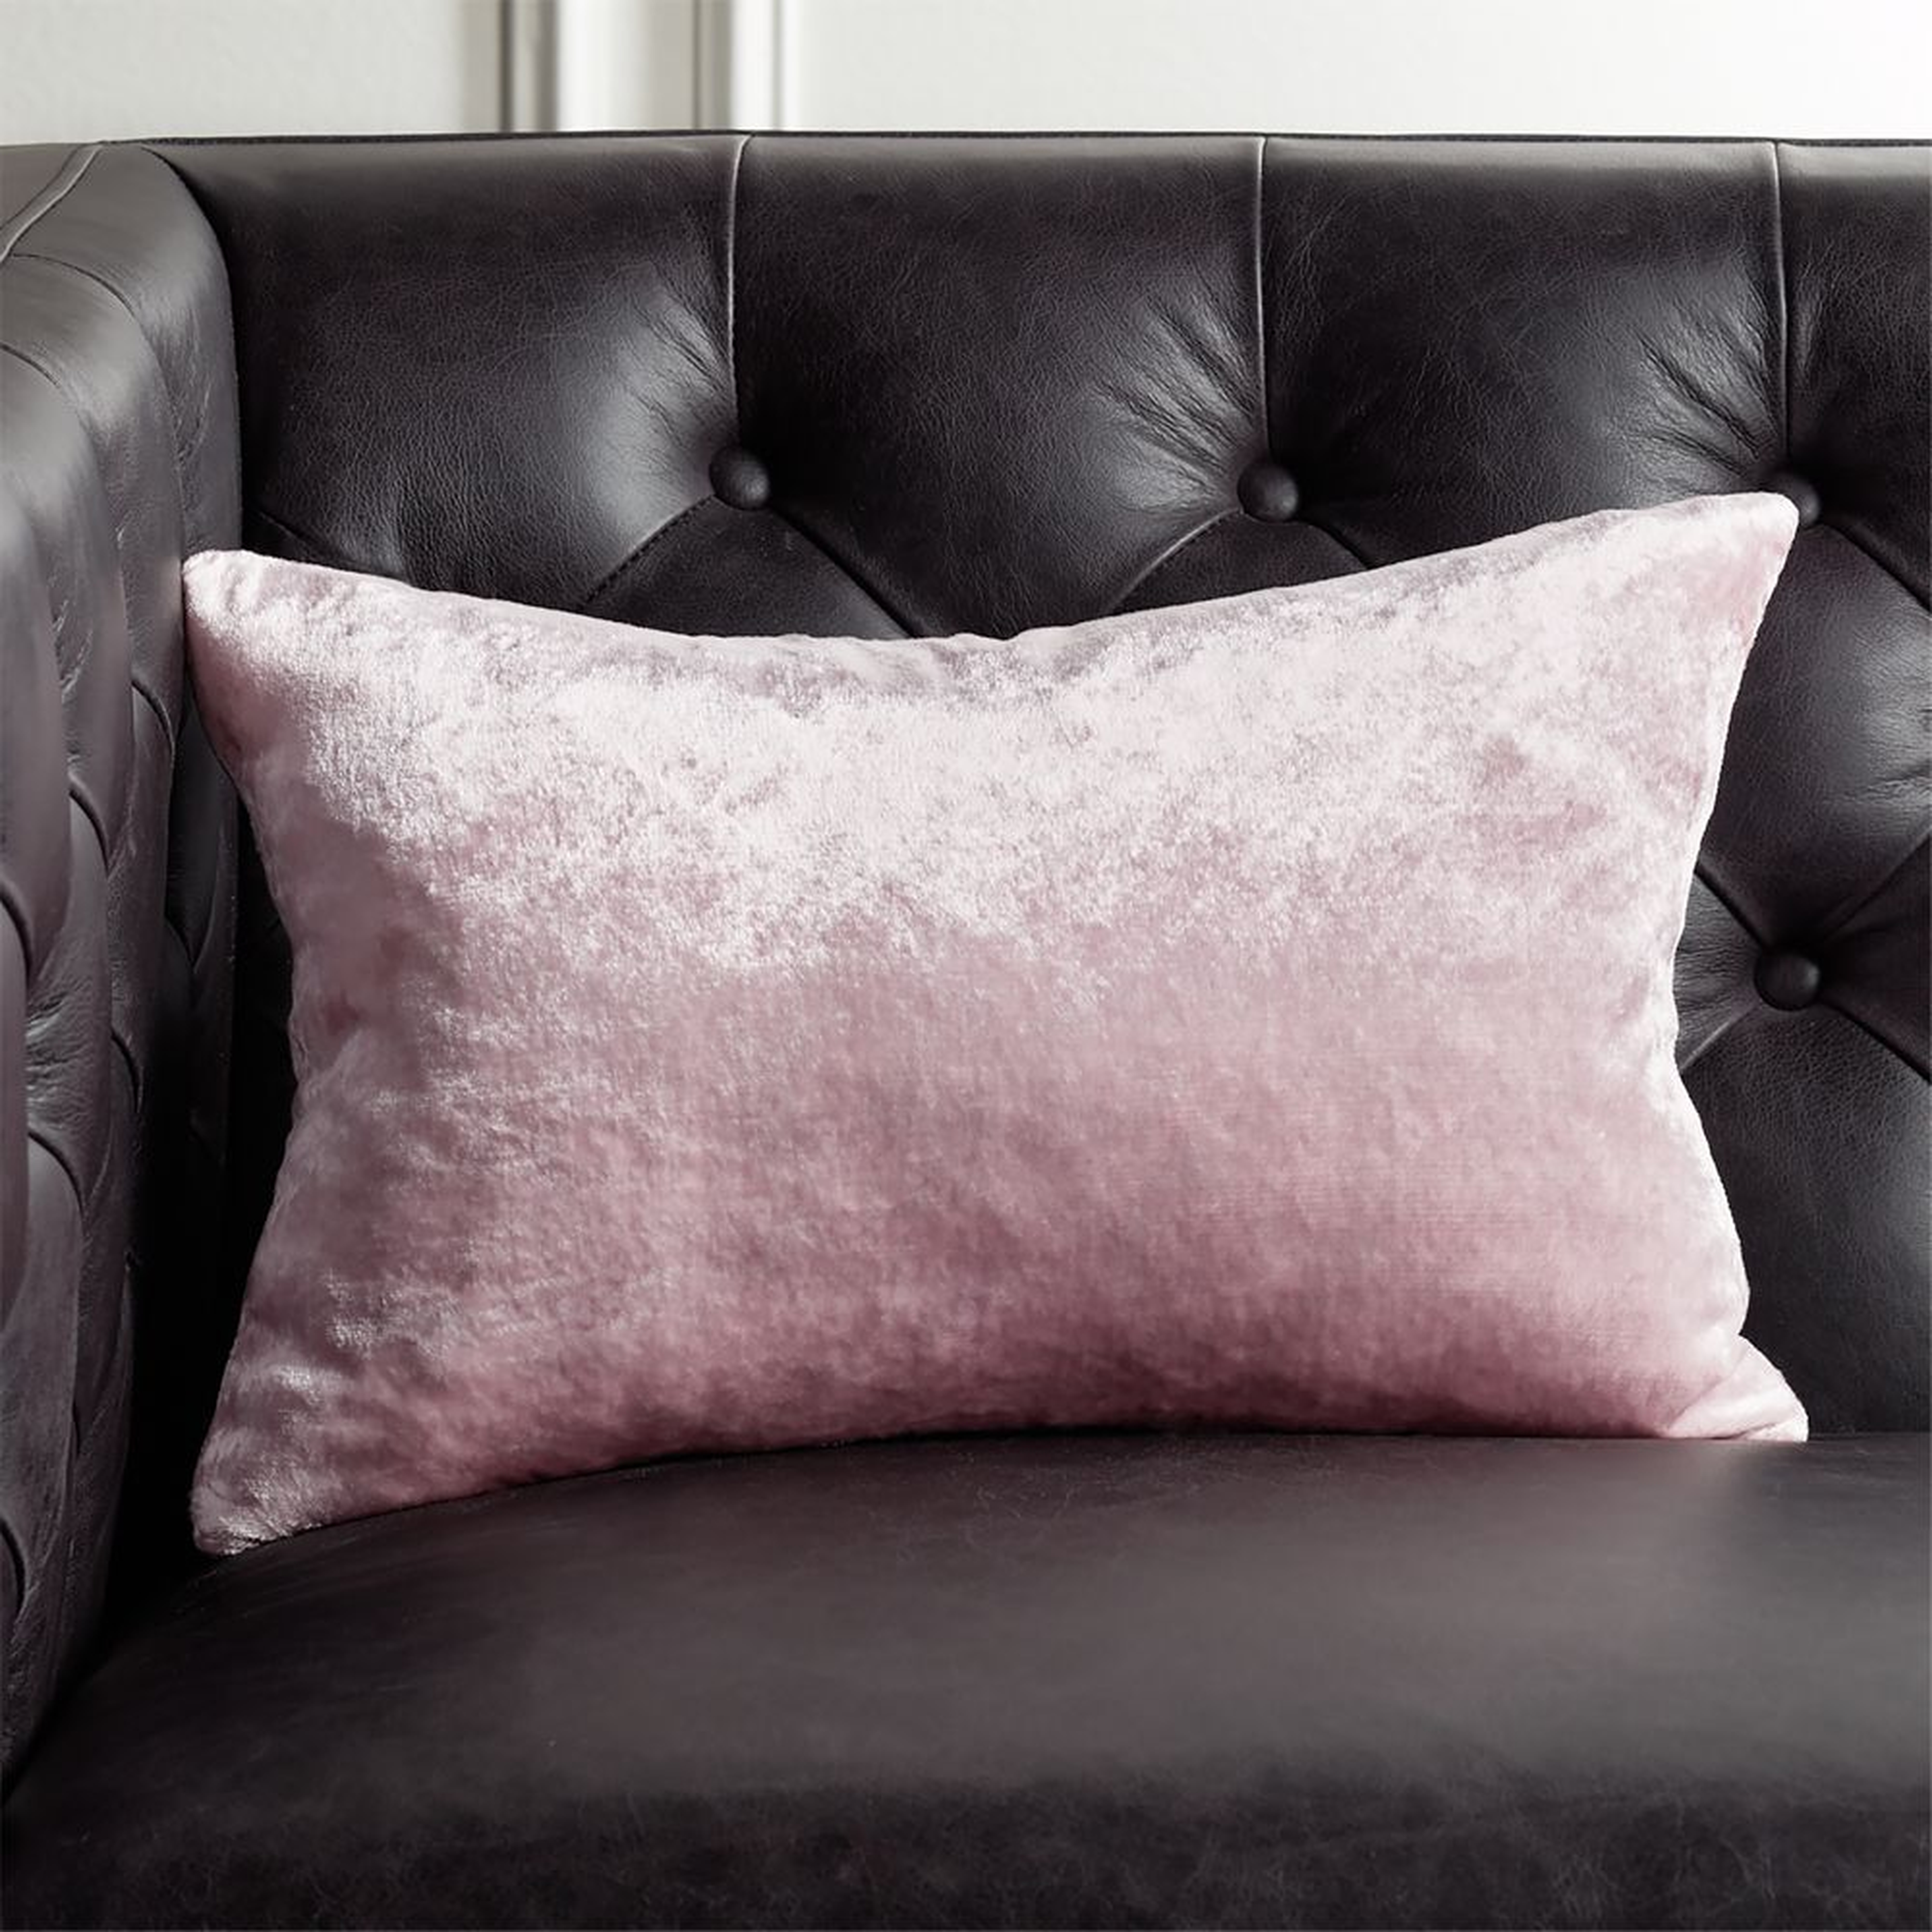 18"x12" Viscose Pink Velvet Pillow with Down-Alternative Insert - CB2